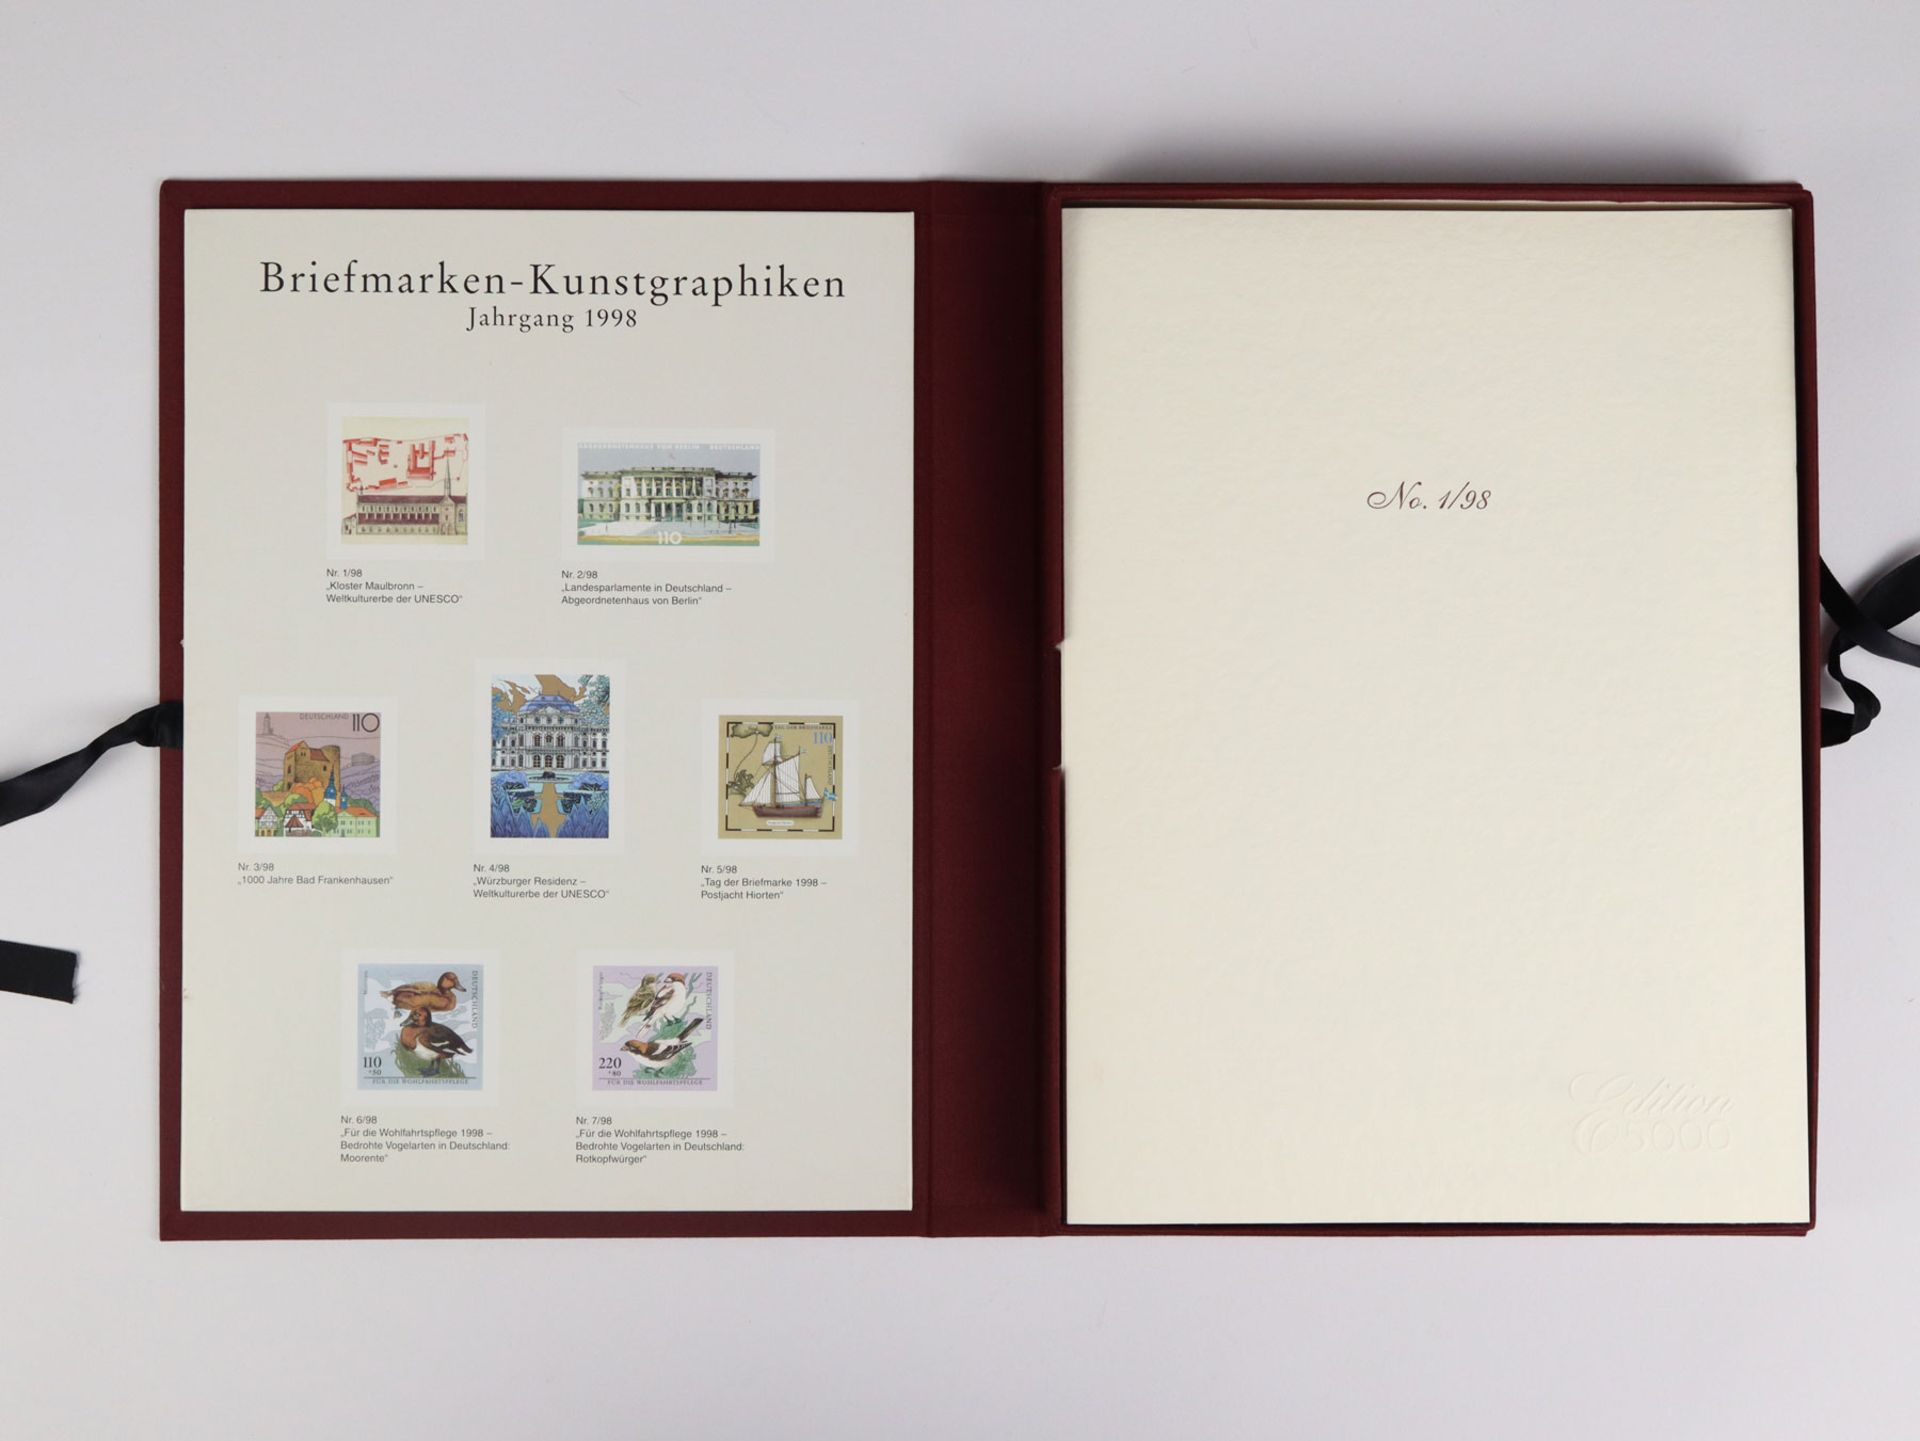 Briefmarken-Kunstgraphiken 1998